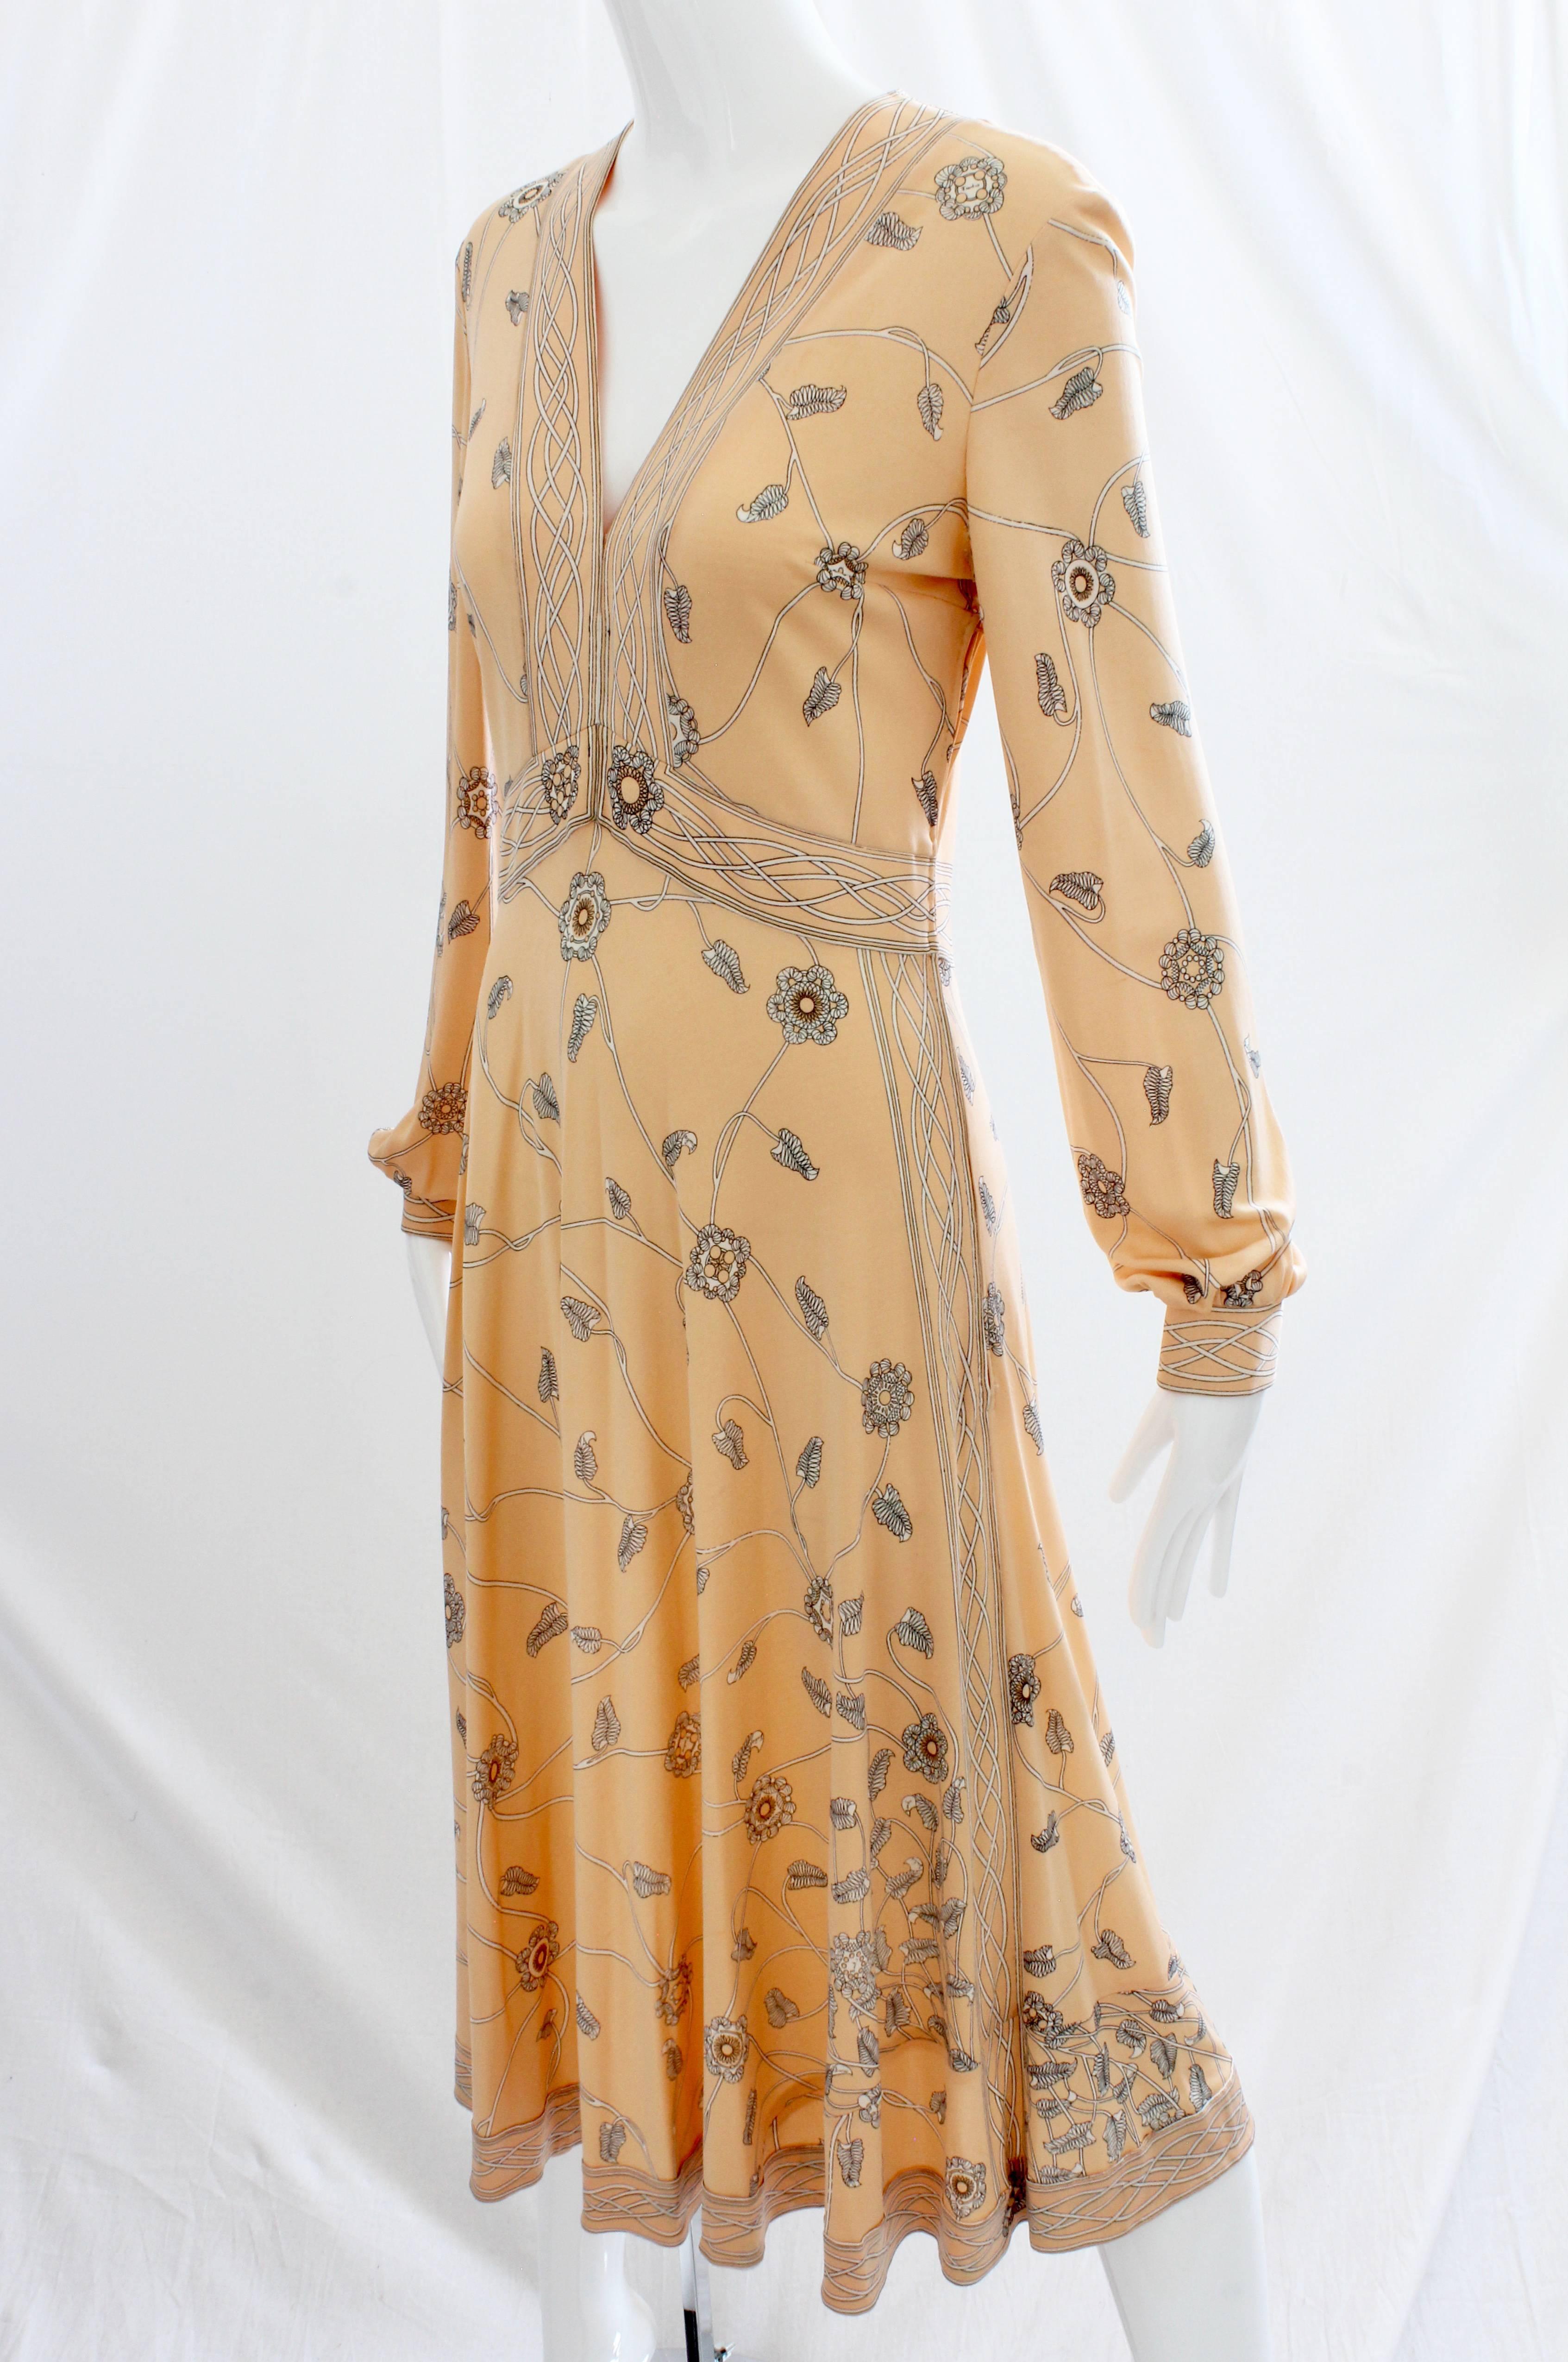 Emilio Pucci Peach Floral Graphic Print Silk Jersey Dress, 1960s 1